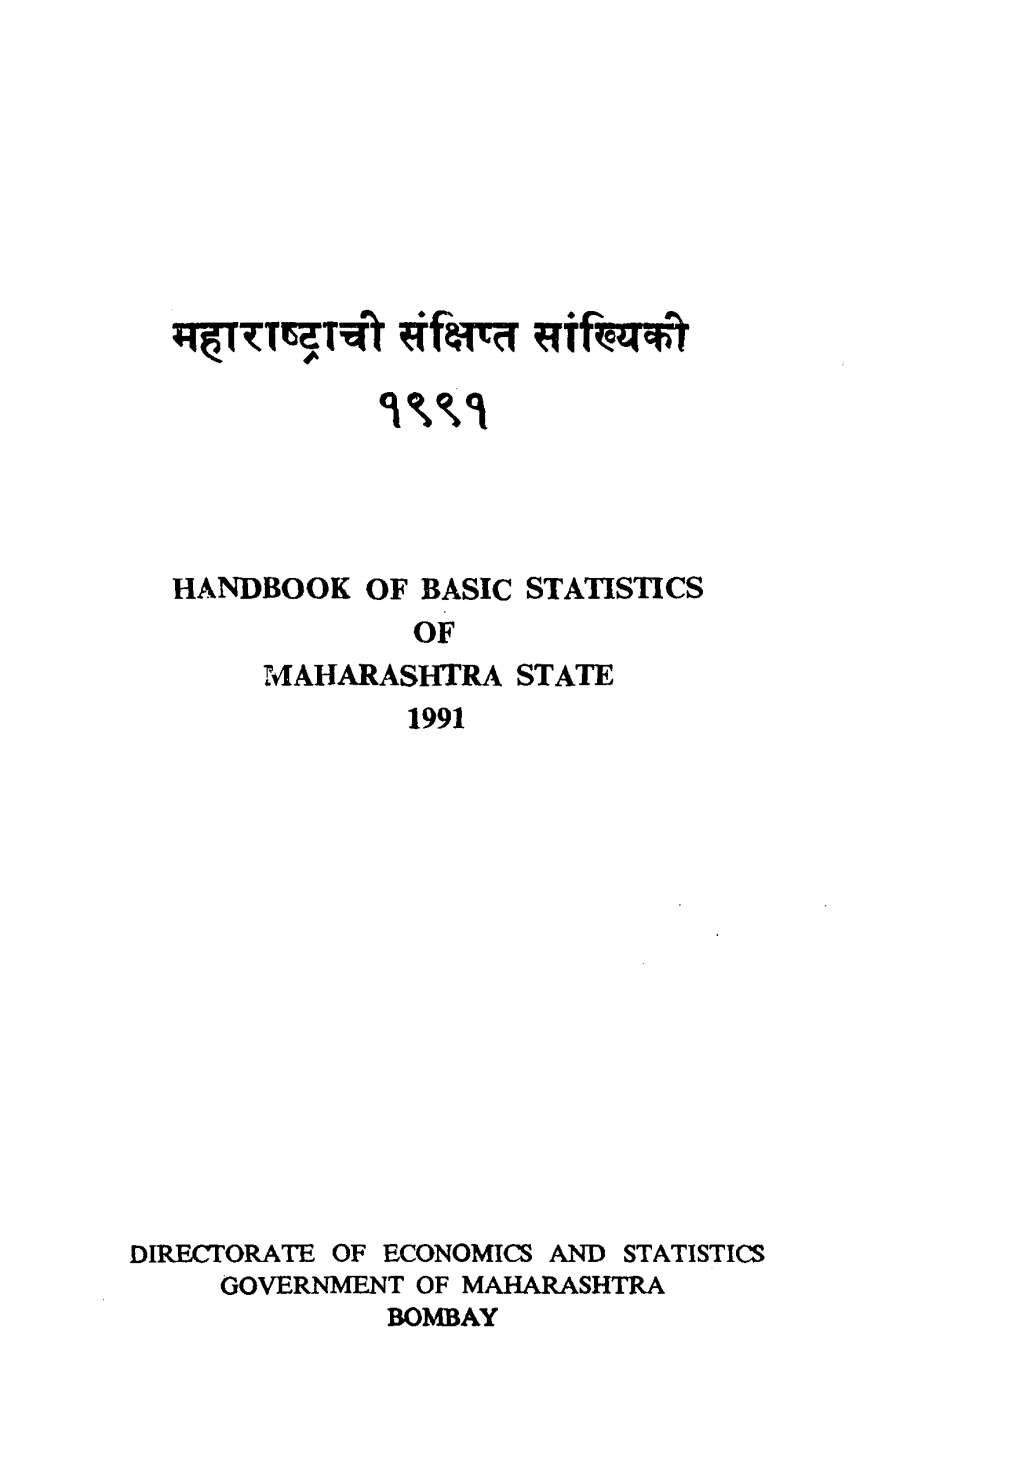 Handbook of Basic Statistics of Maharashtra State 1991